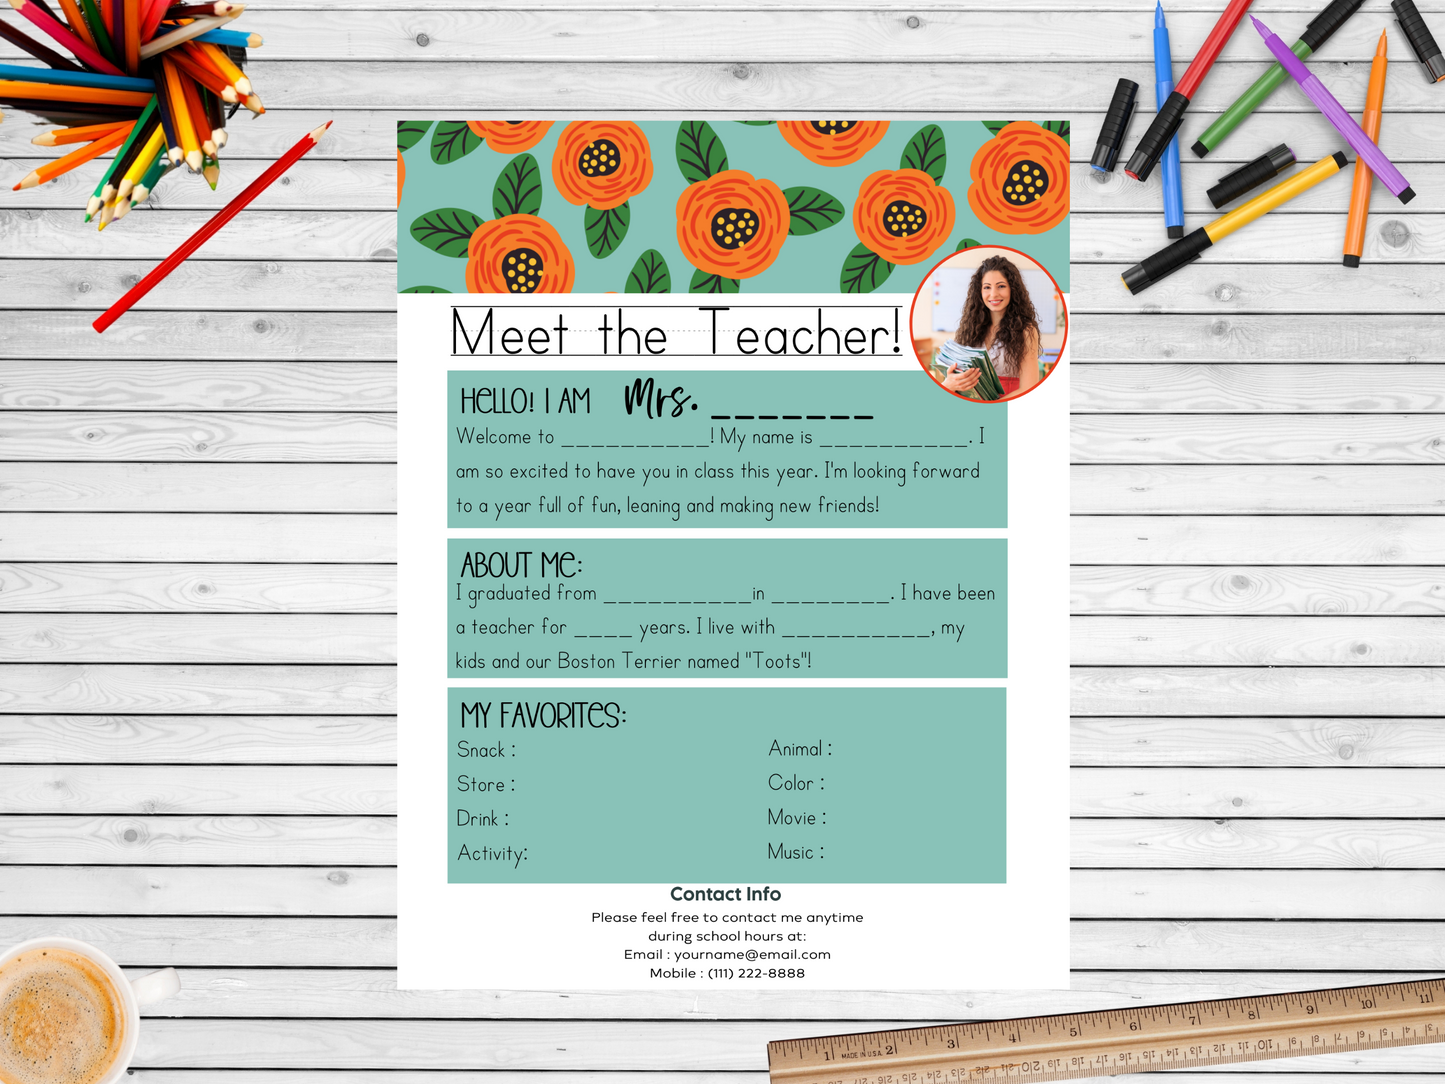 Meet the Teacher Letter Template - Orange Floral